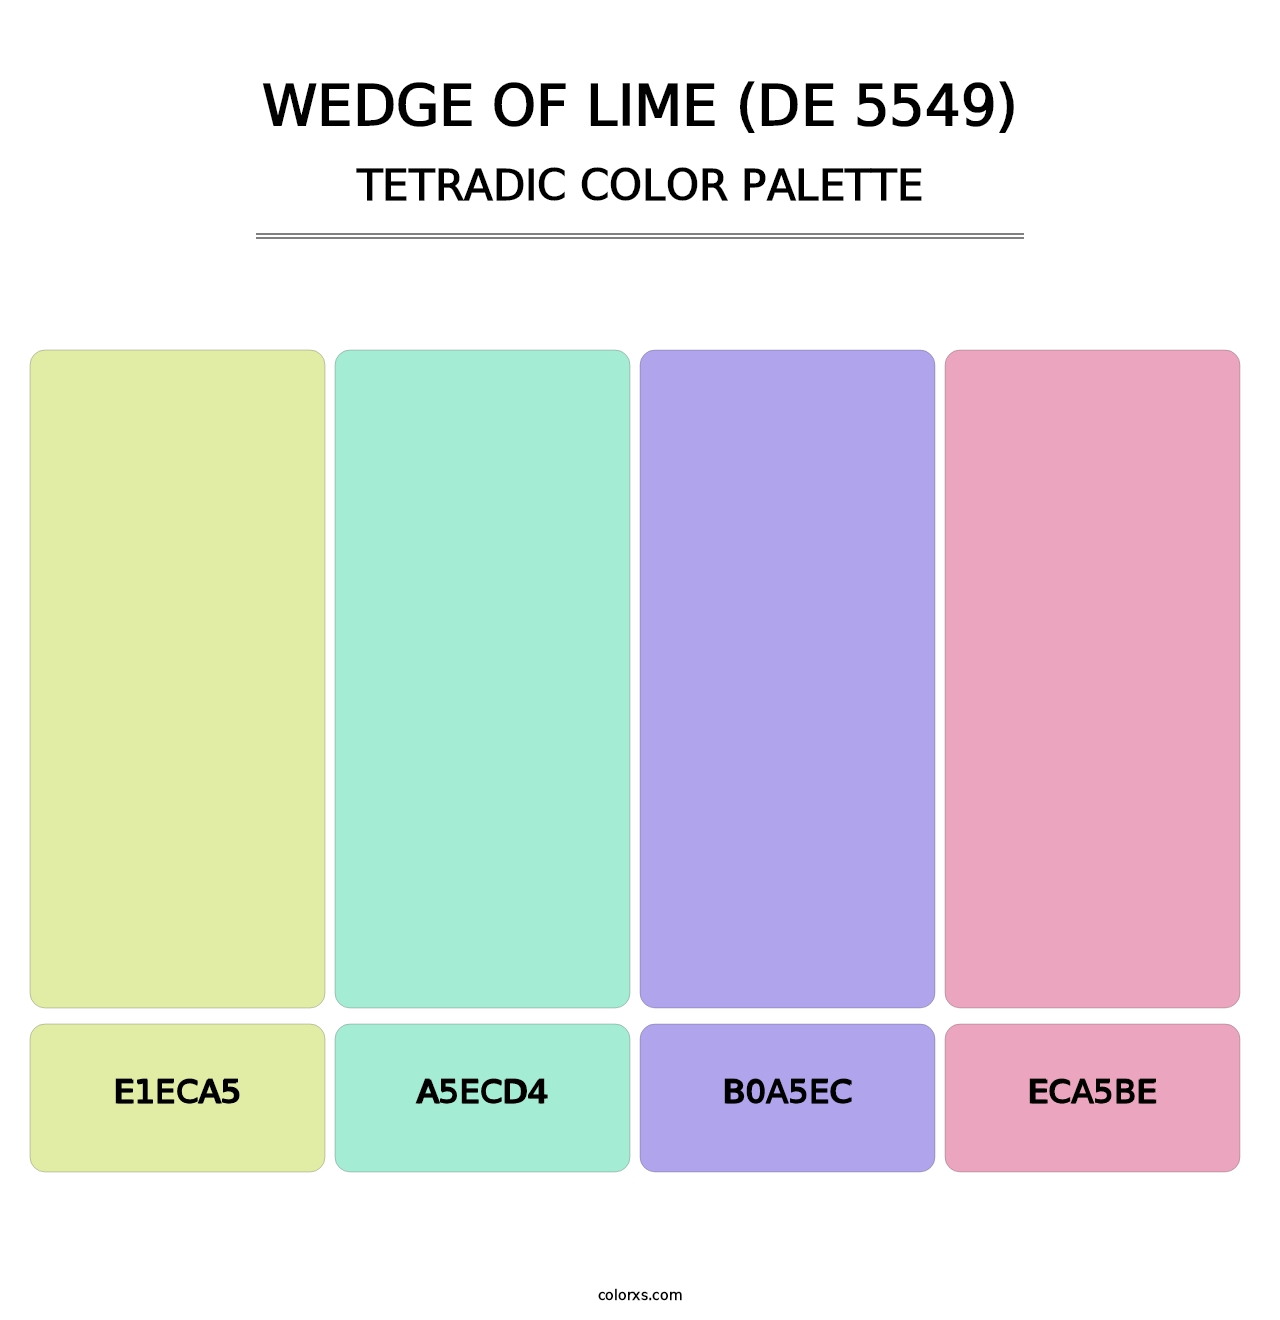 Wedge of Lime (DE 5549) - Tetradic Color Palette